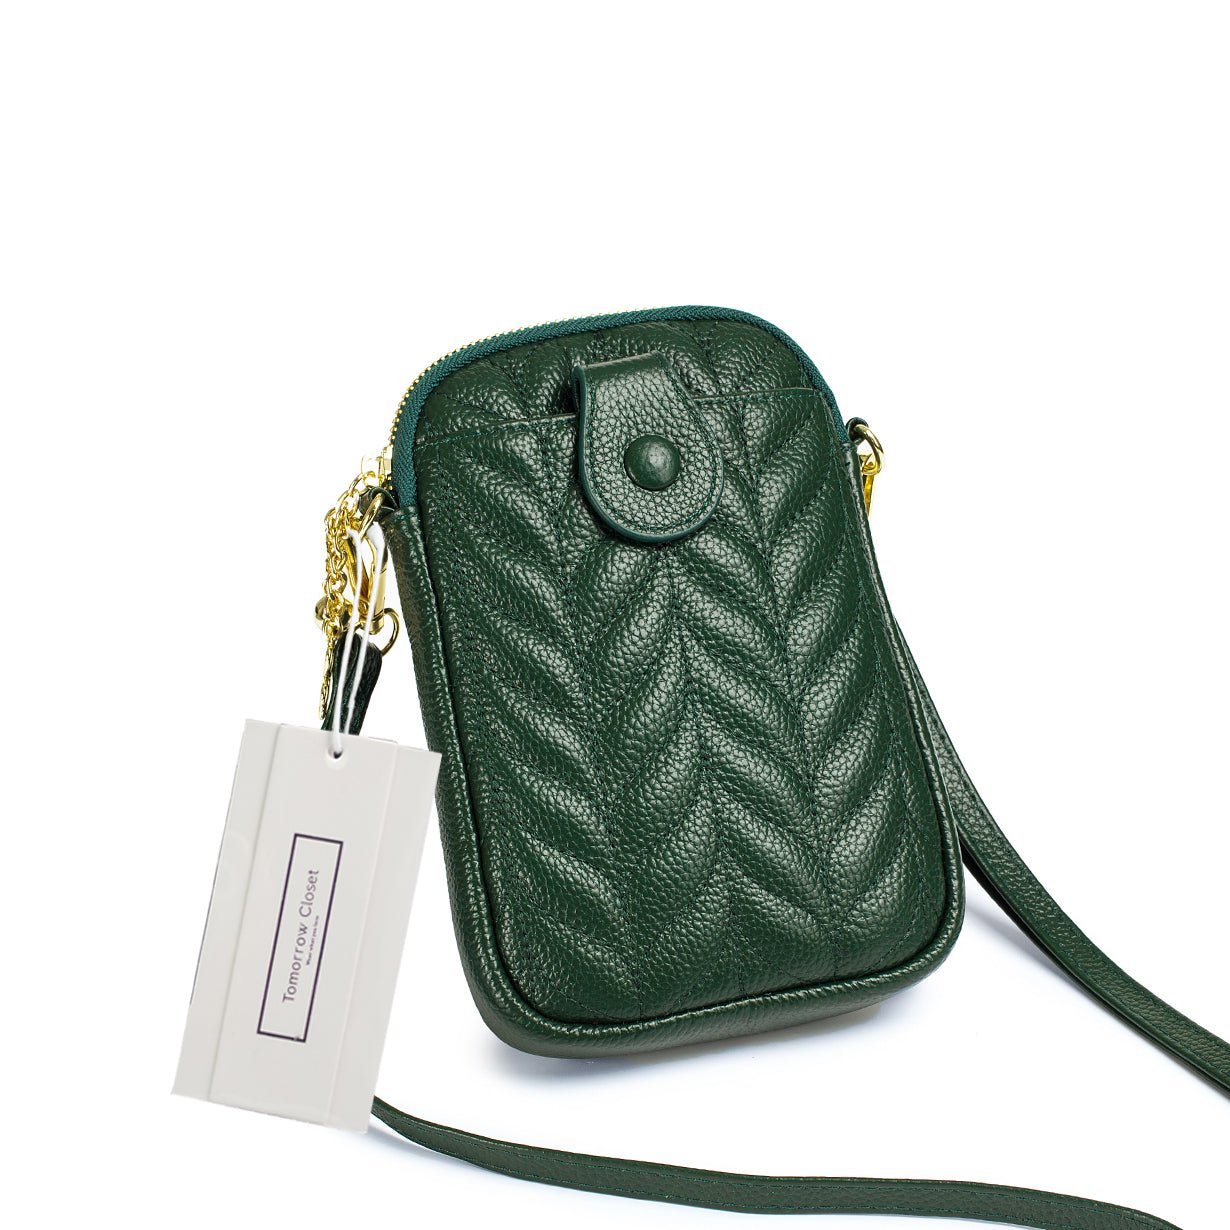 Women's genuine cowhide leather handphone bag Mirren Chevron design